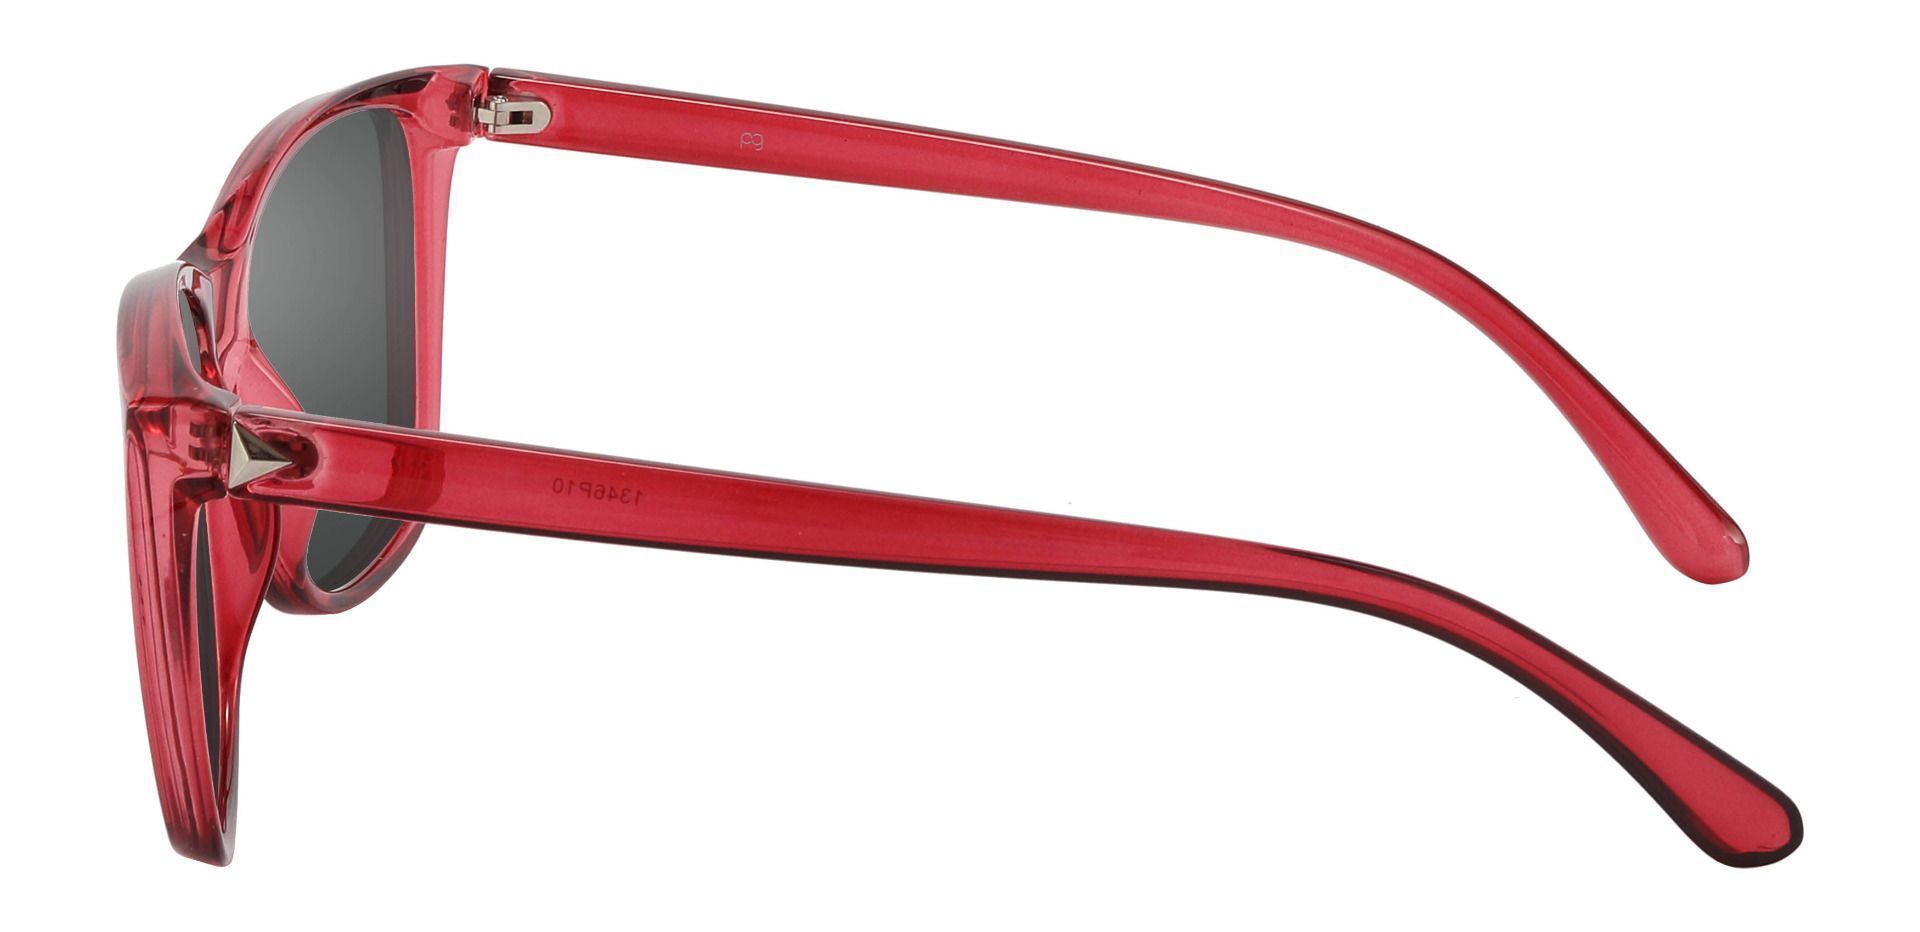 Taryn Square Prescription Sunglasses - Red Frame With Gray Lenses